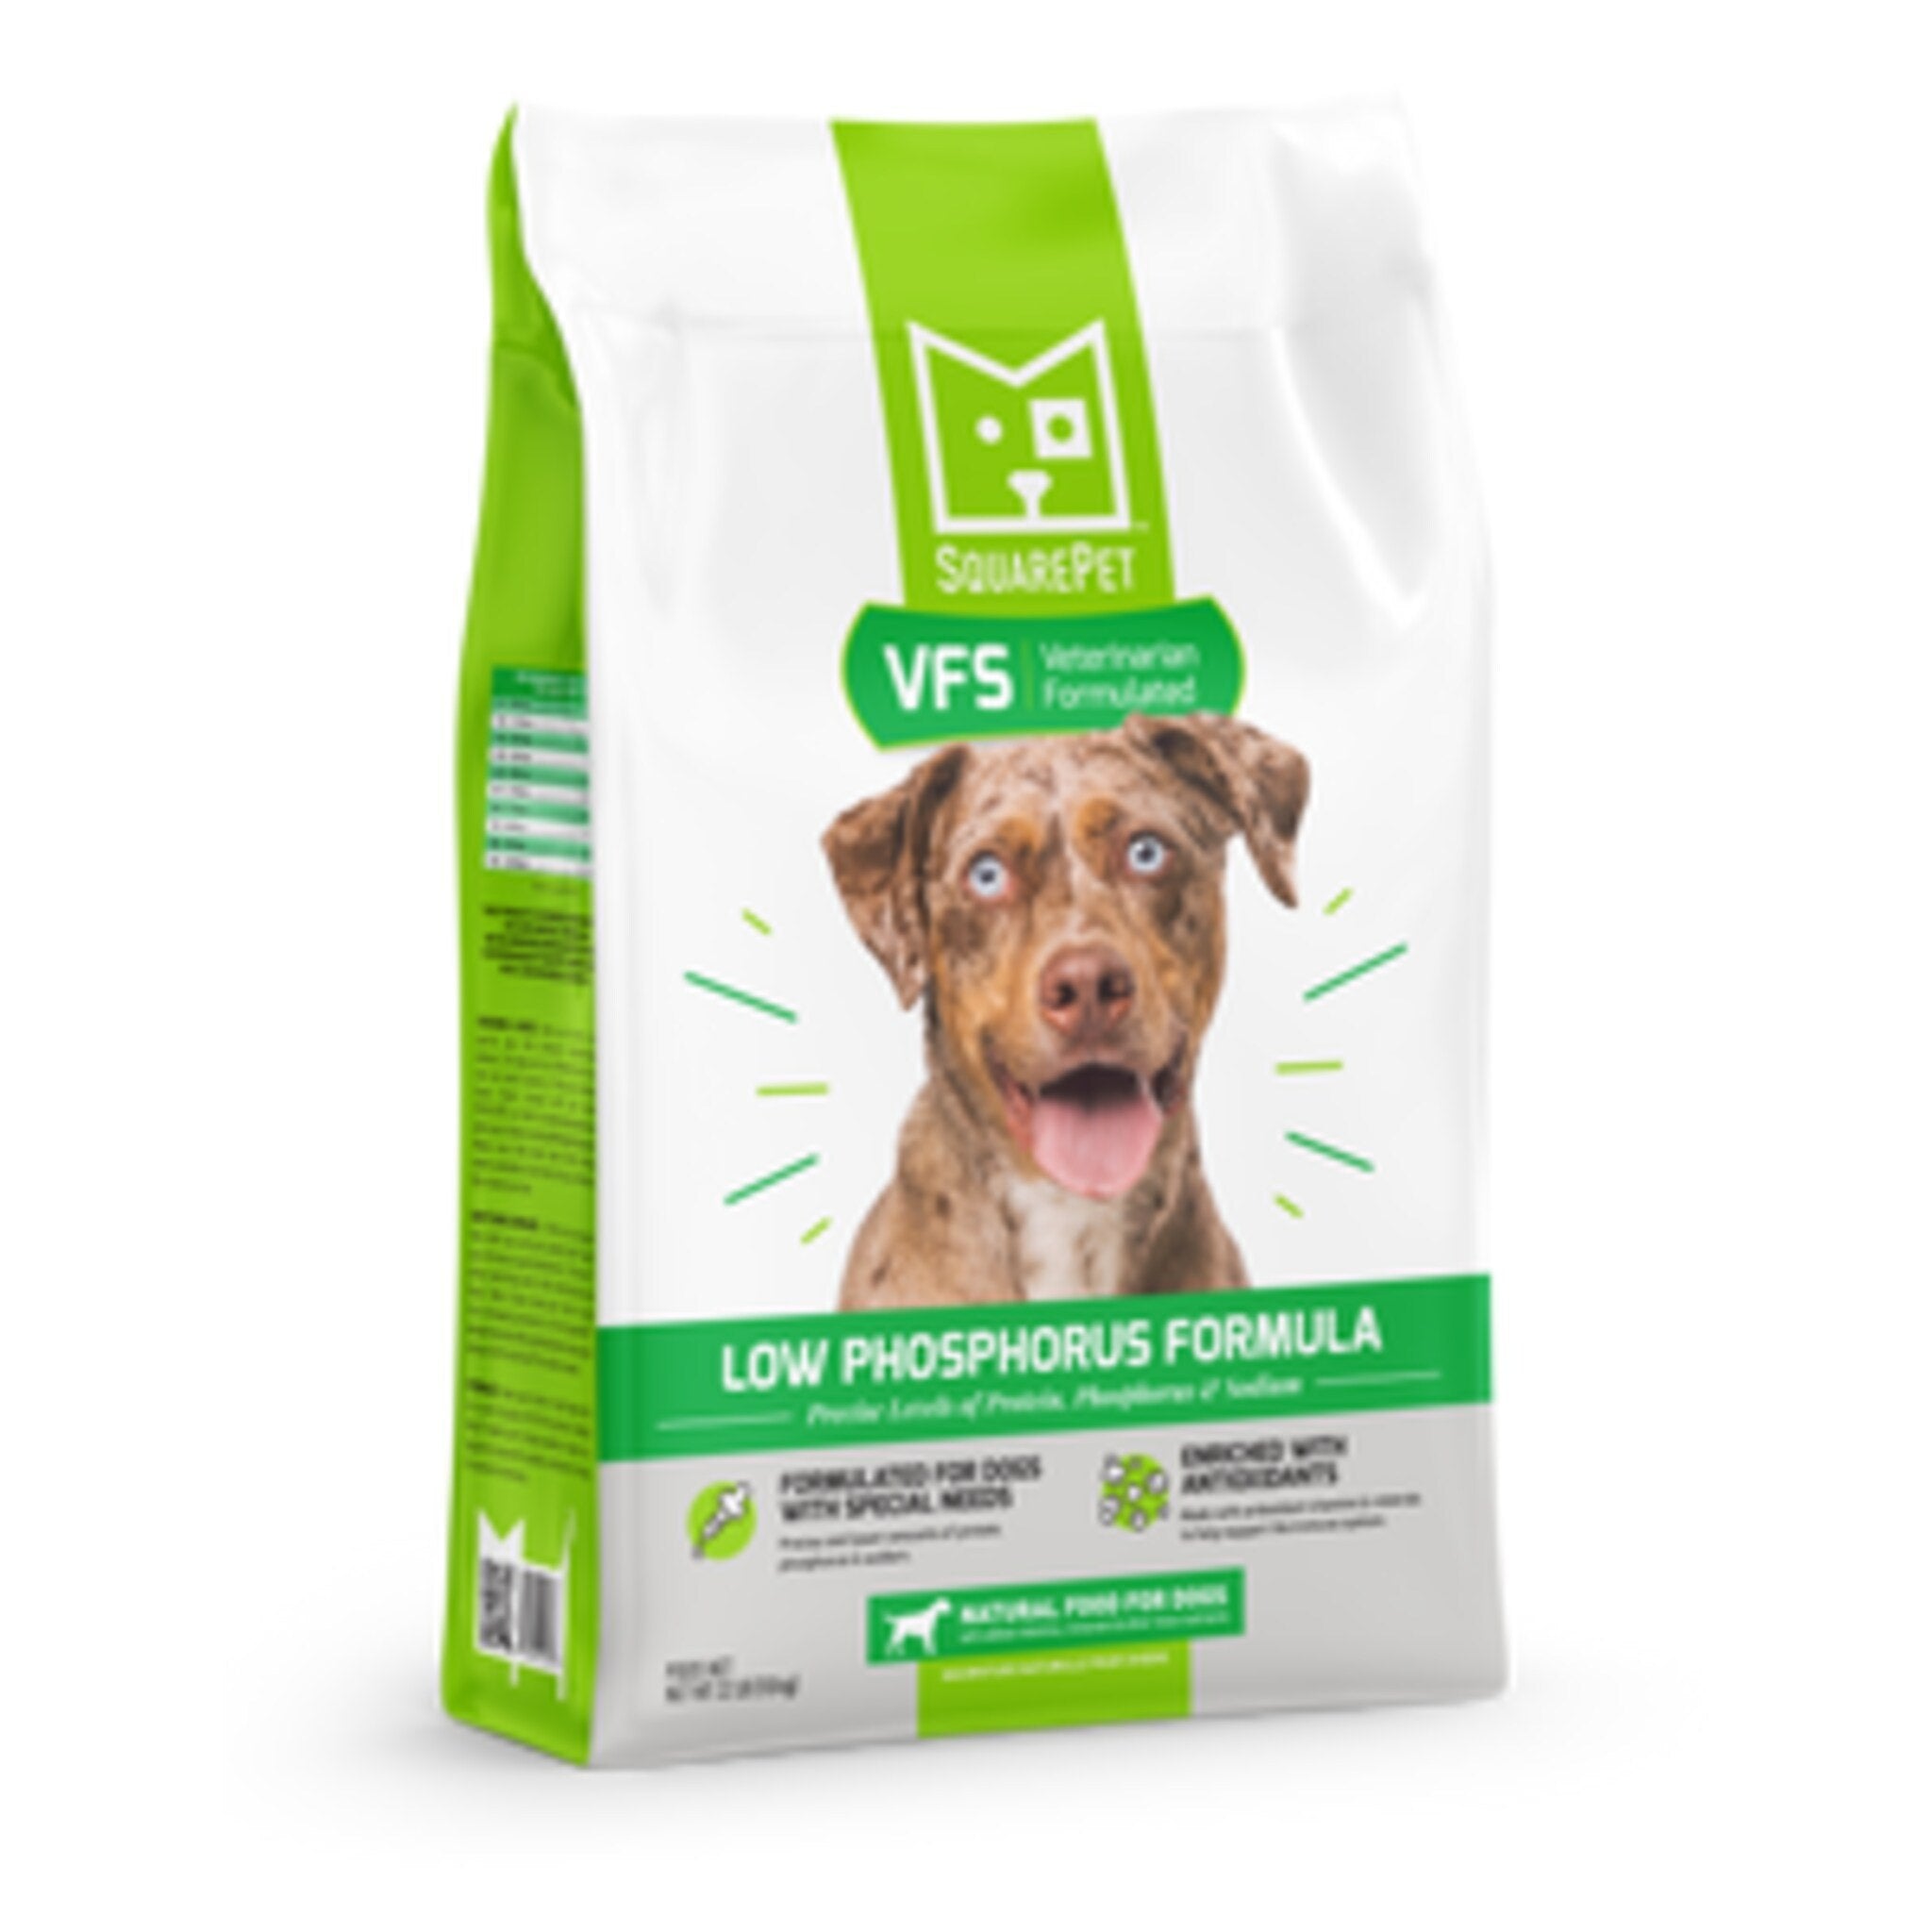 SquarePet Veterinarian Formulated Solutions Low Phosphorus Dog Food